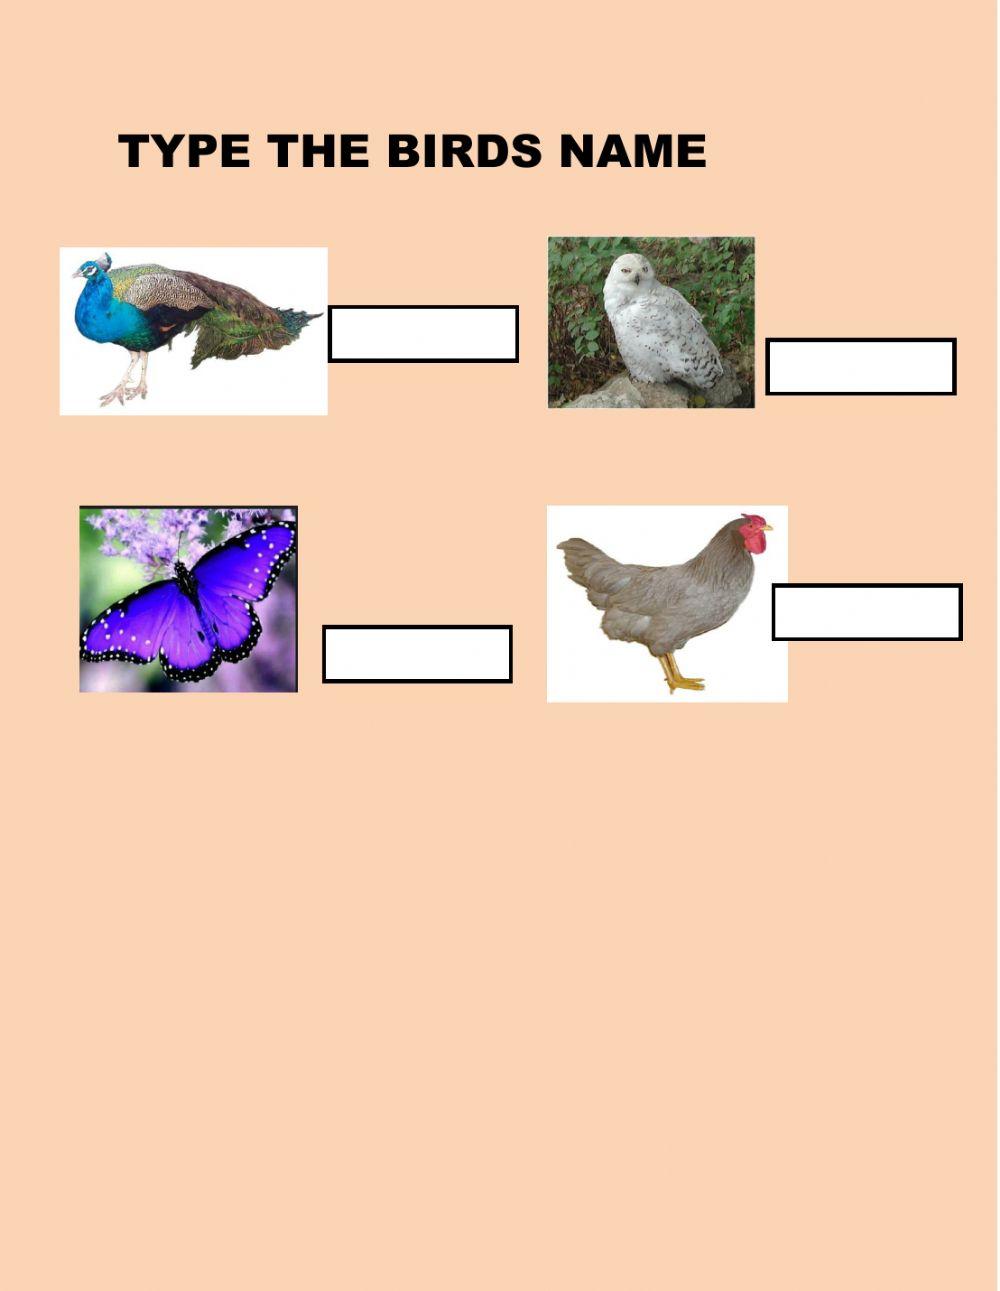 TYPE THE BIRDS NAMES